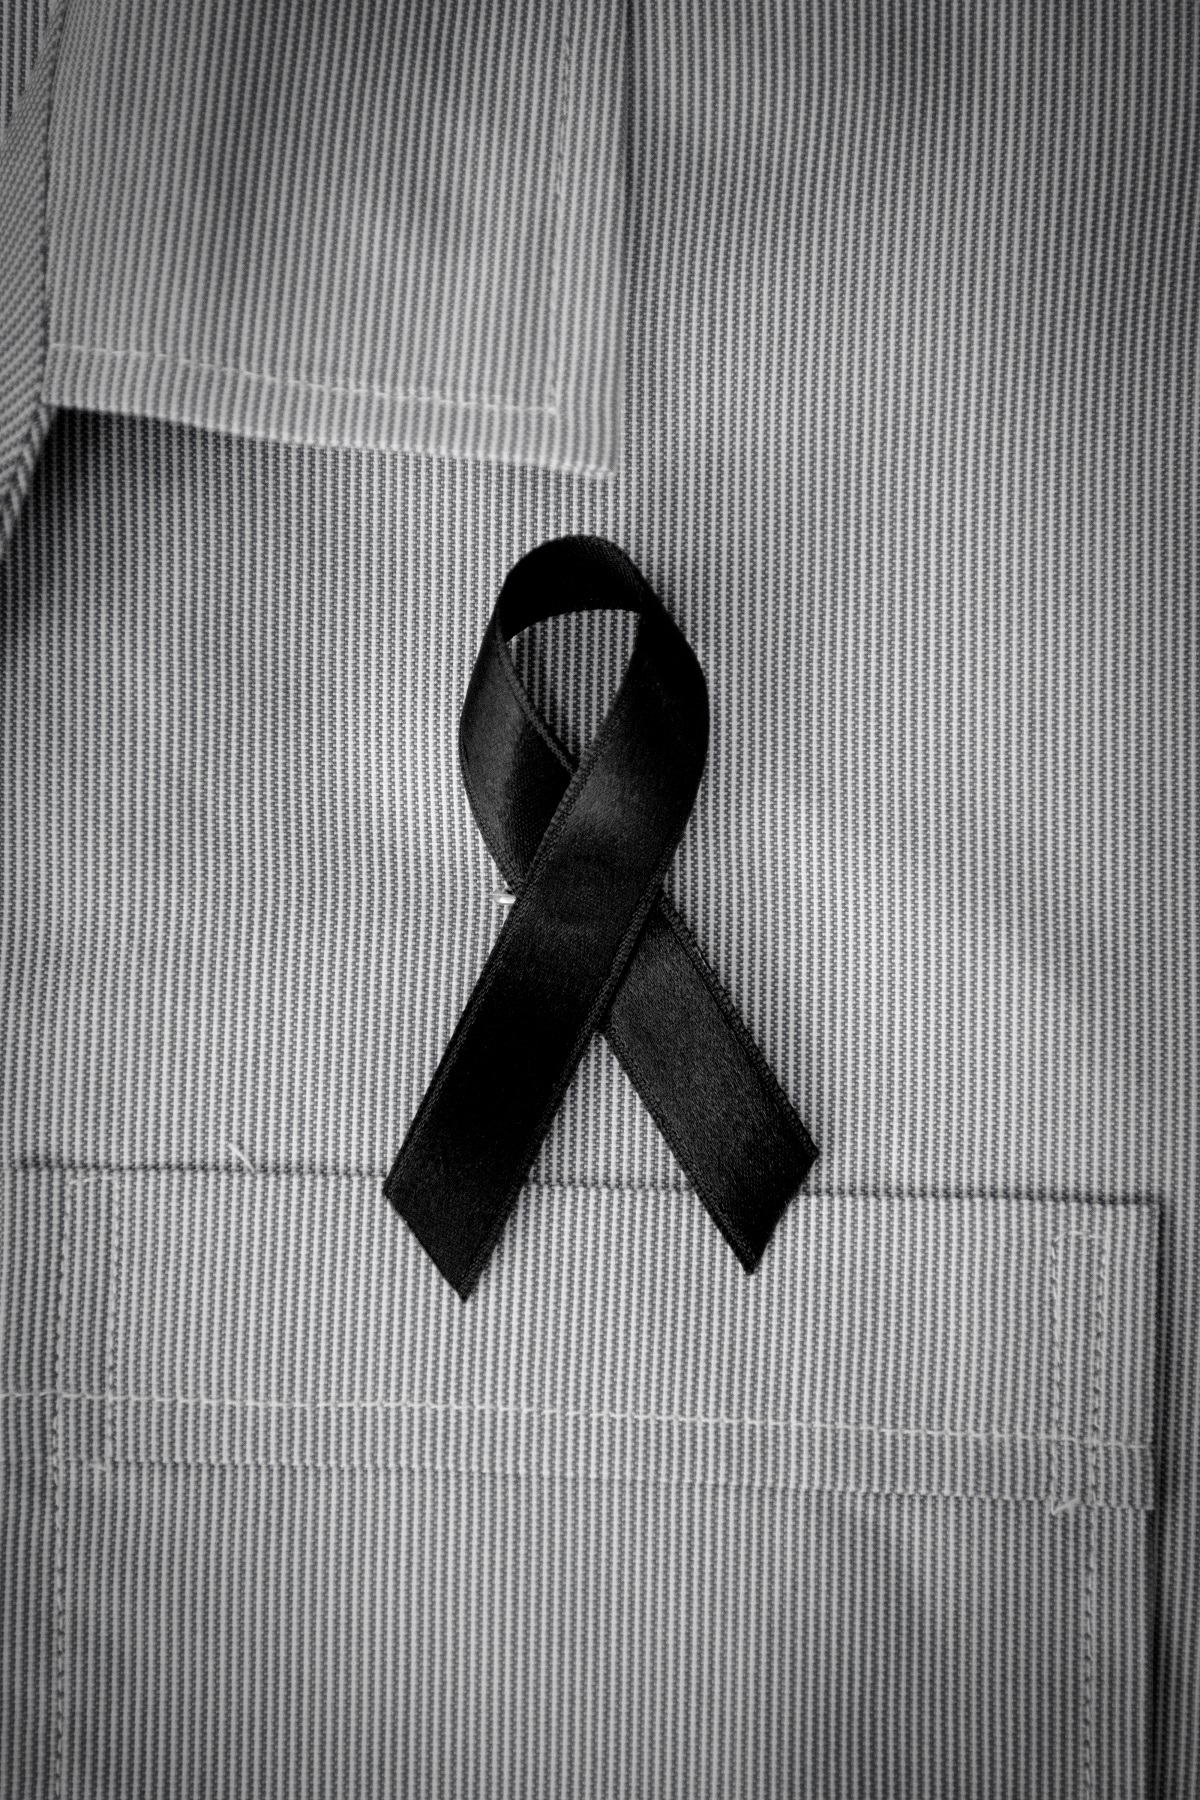 black awareness ribbon on shirt